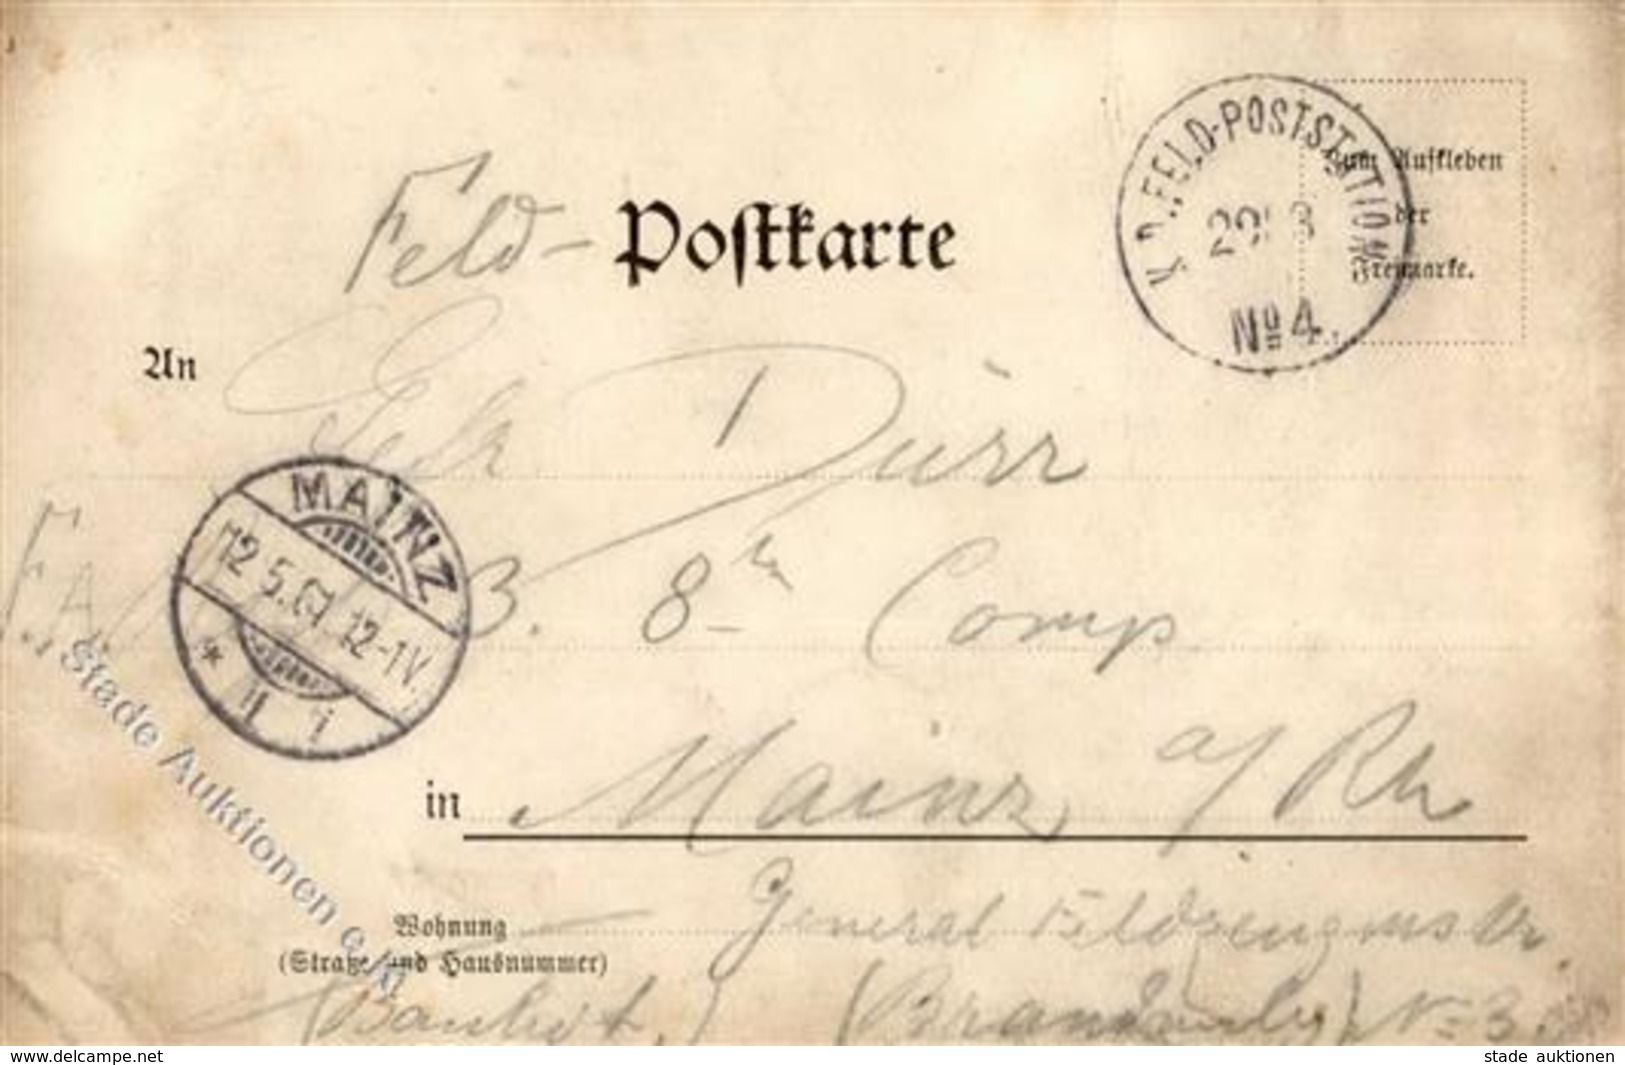 Deutsche Post China Stpl. K.D. Feldpoststation 16.3. No. 4 Nach Mainz 1901 II (Stauchung, Fleckig) - Unclassified